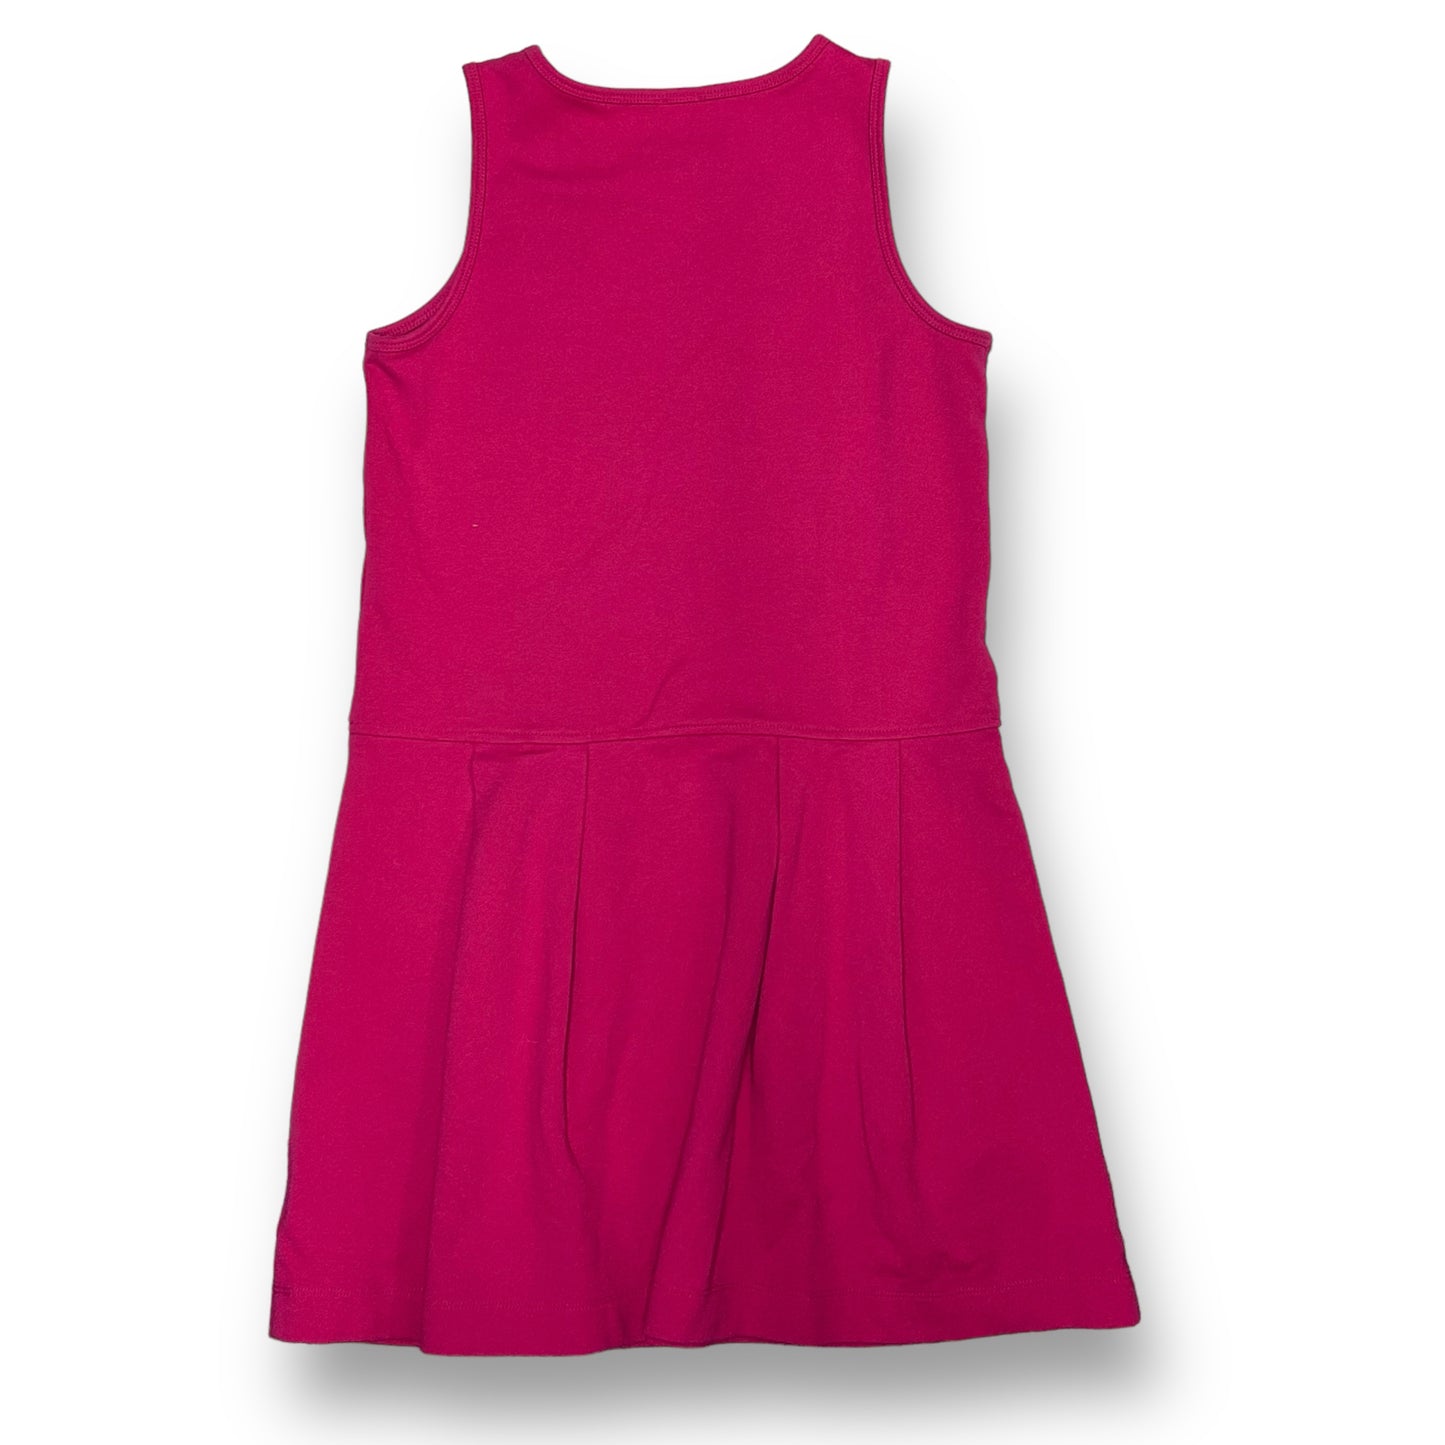 Girls Crewcuts Size 12 Dark Pink Sleeveless Pleated Cotton Blend Dress